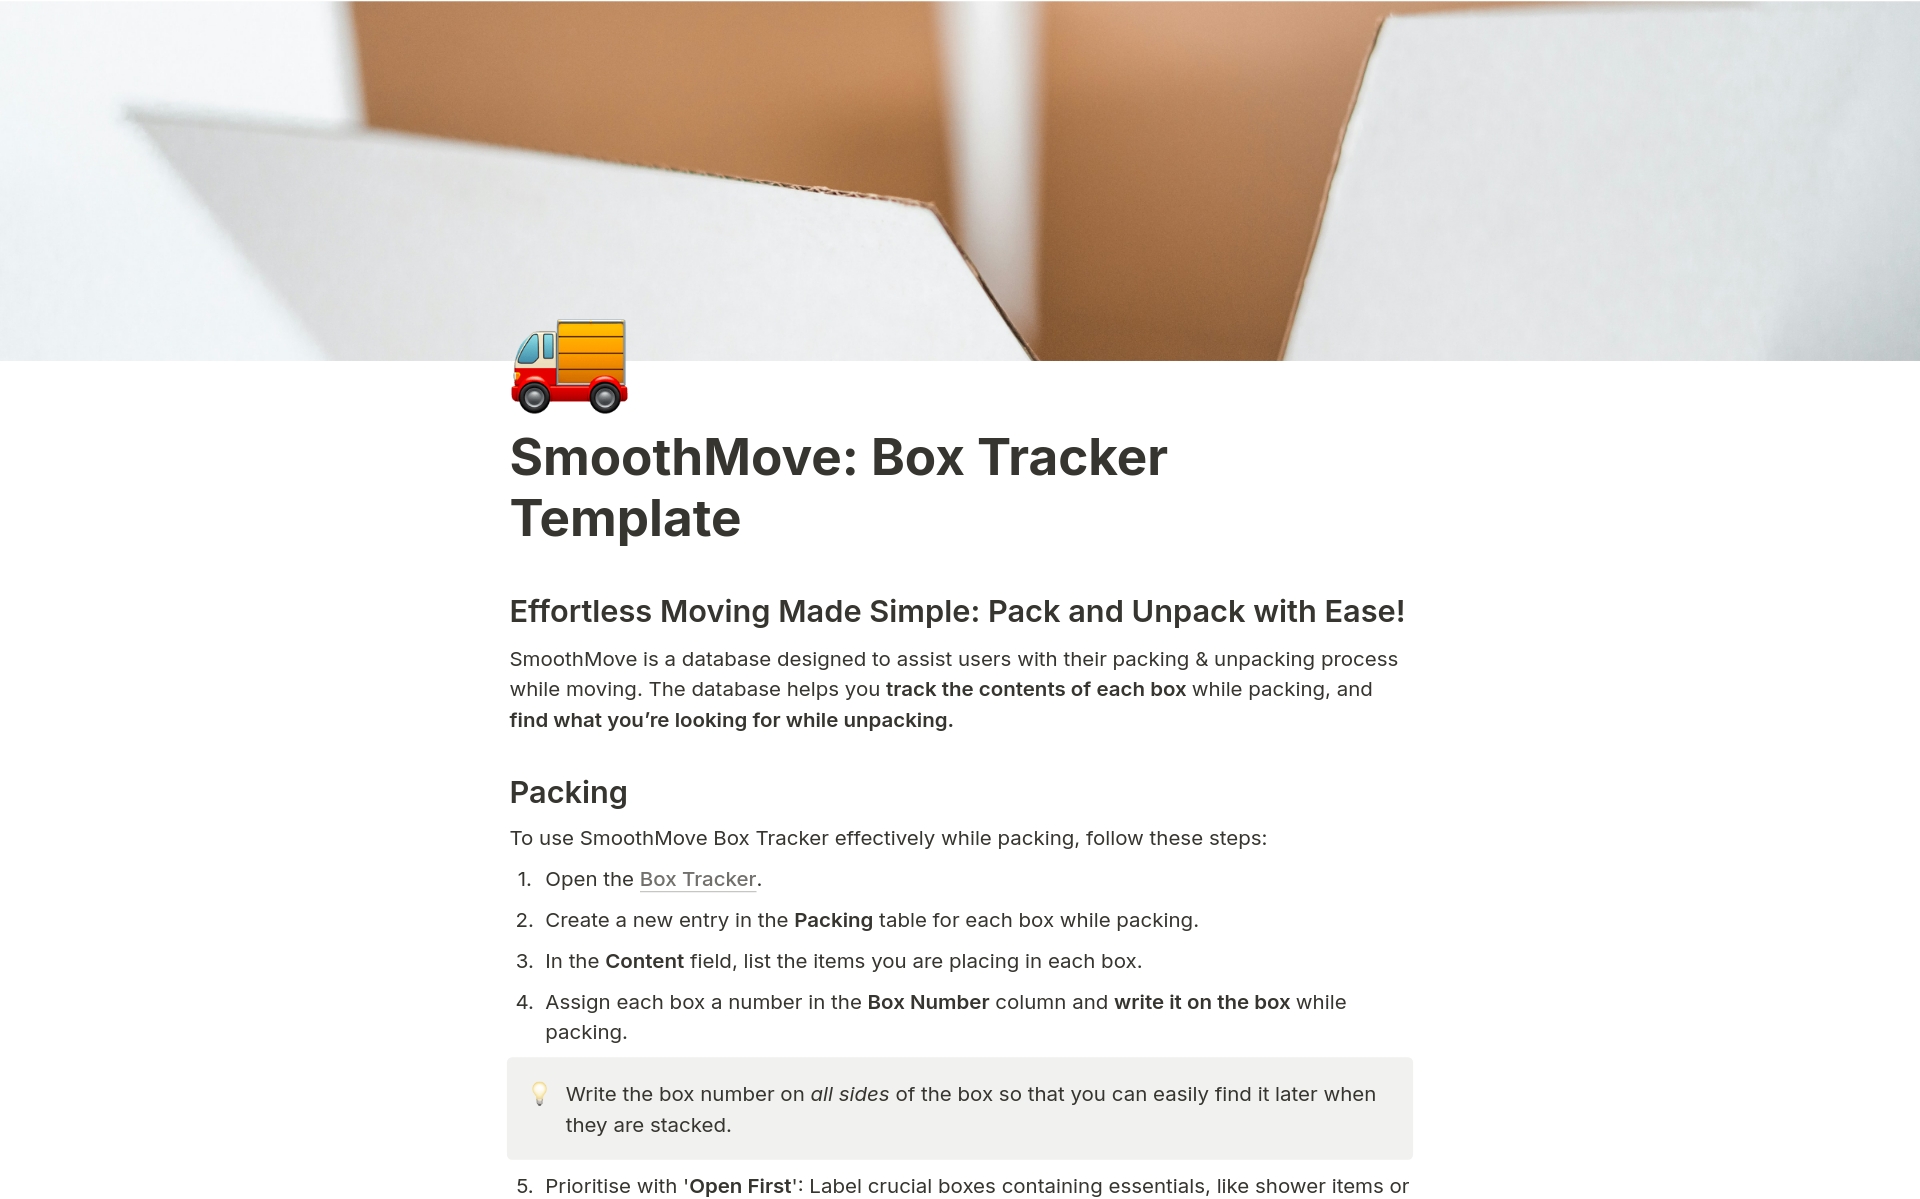 Aperçu du modèle de SmoothMove Box Tracker for your move